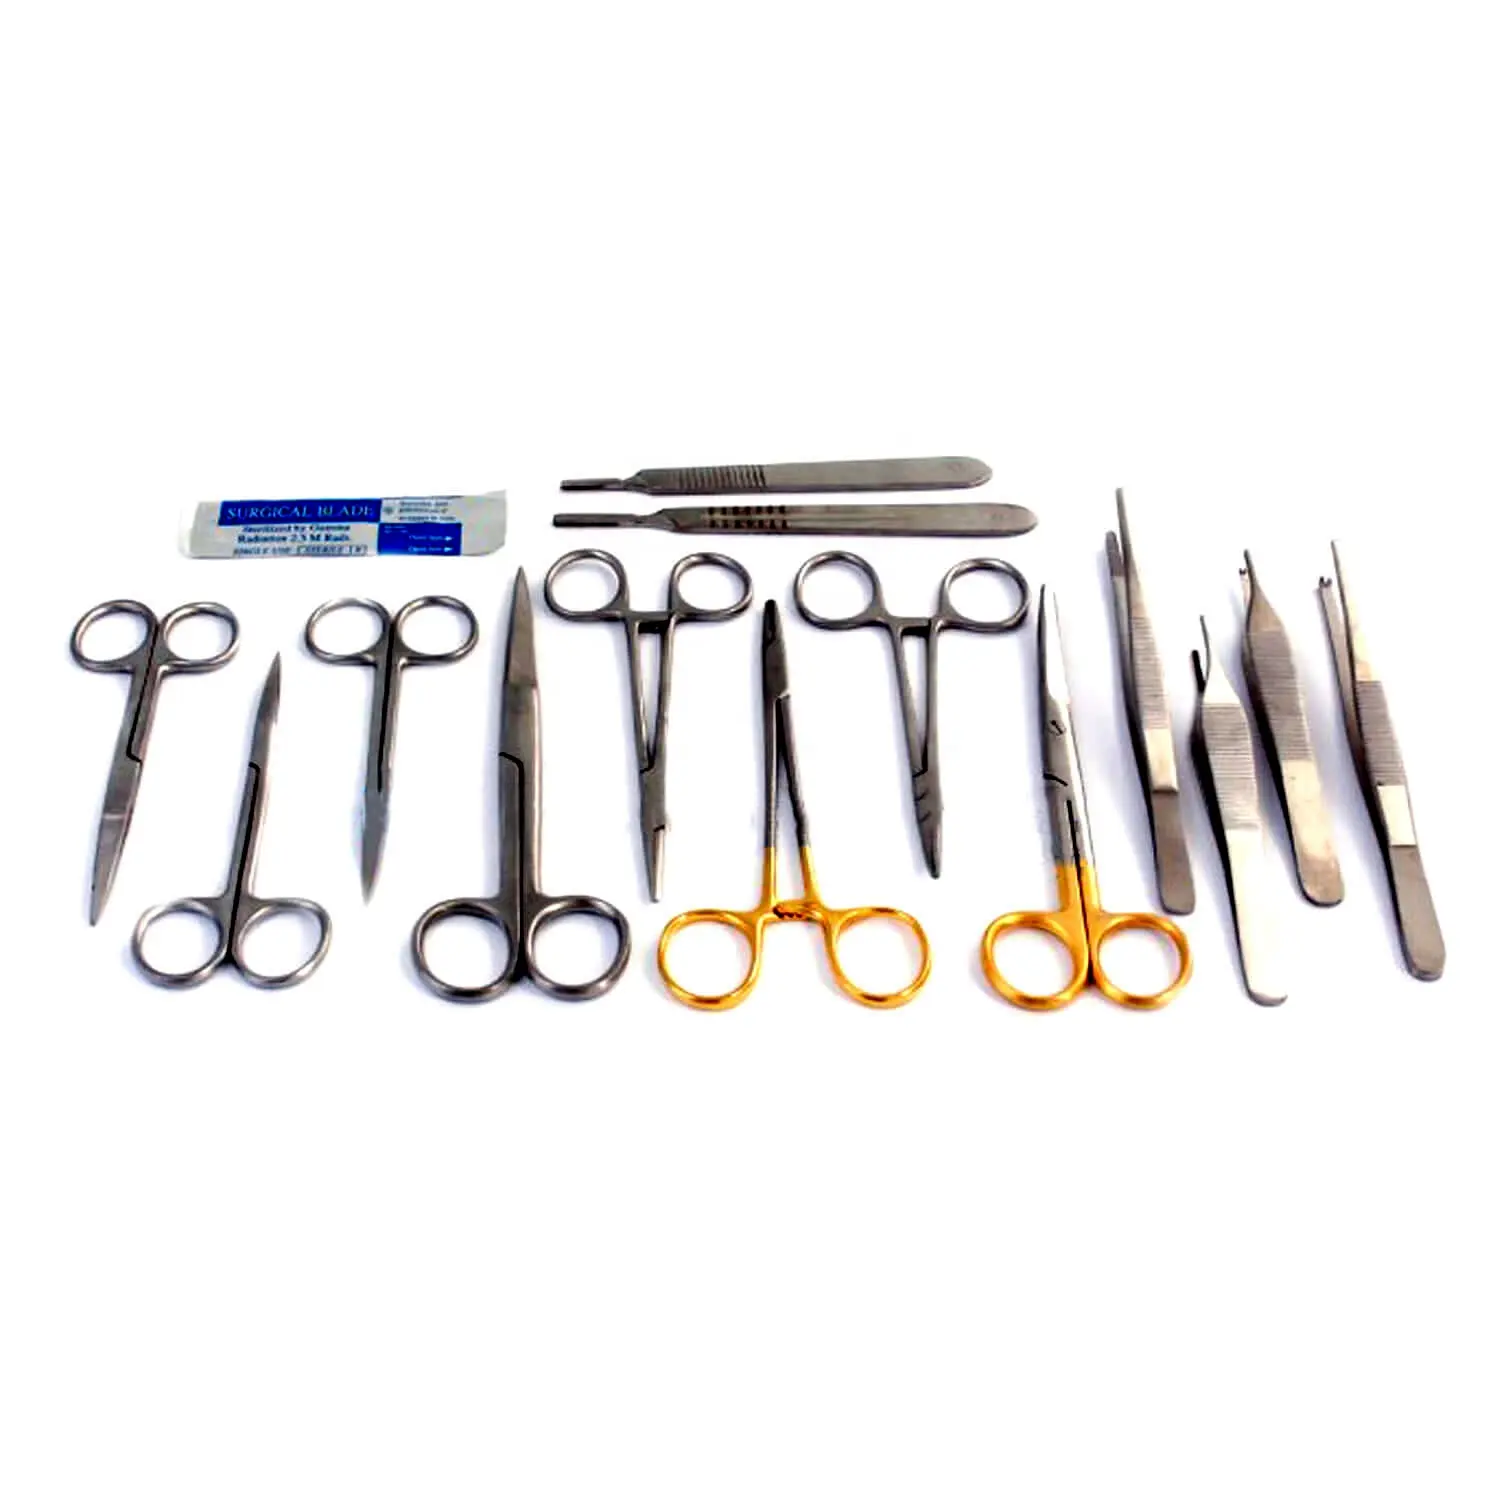 Basic Surgery Dermal Excision Instruments Kit Surgery instruments Set